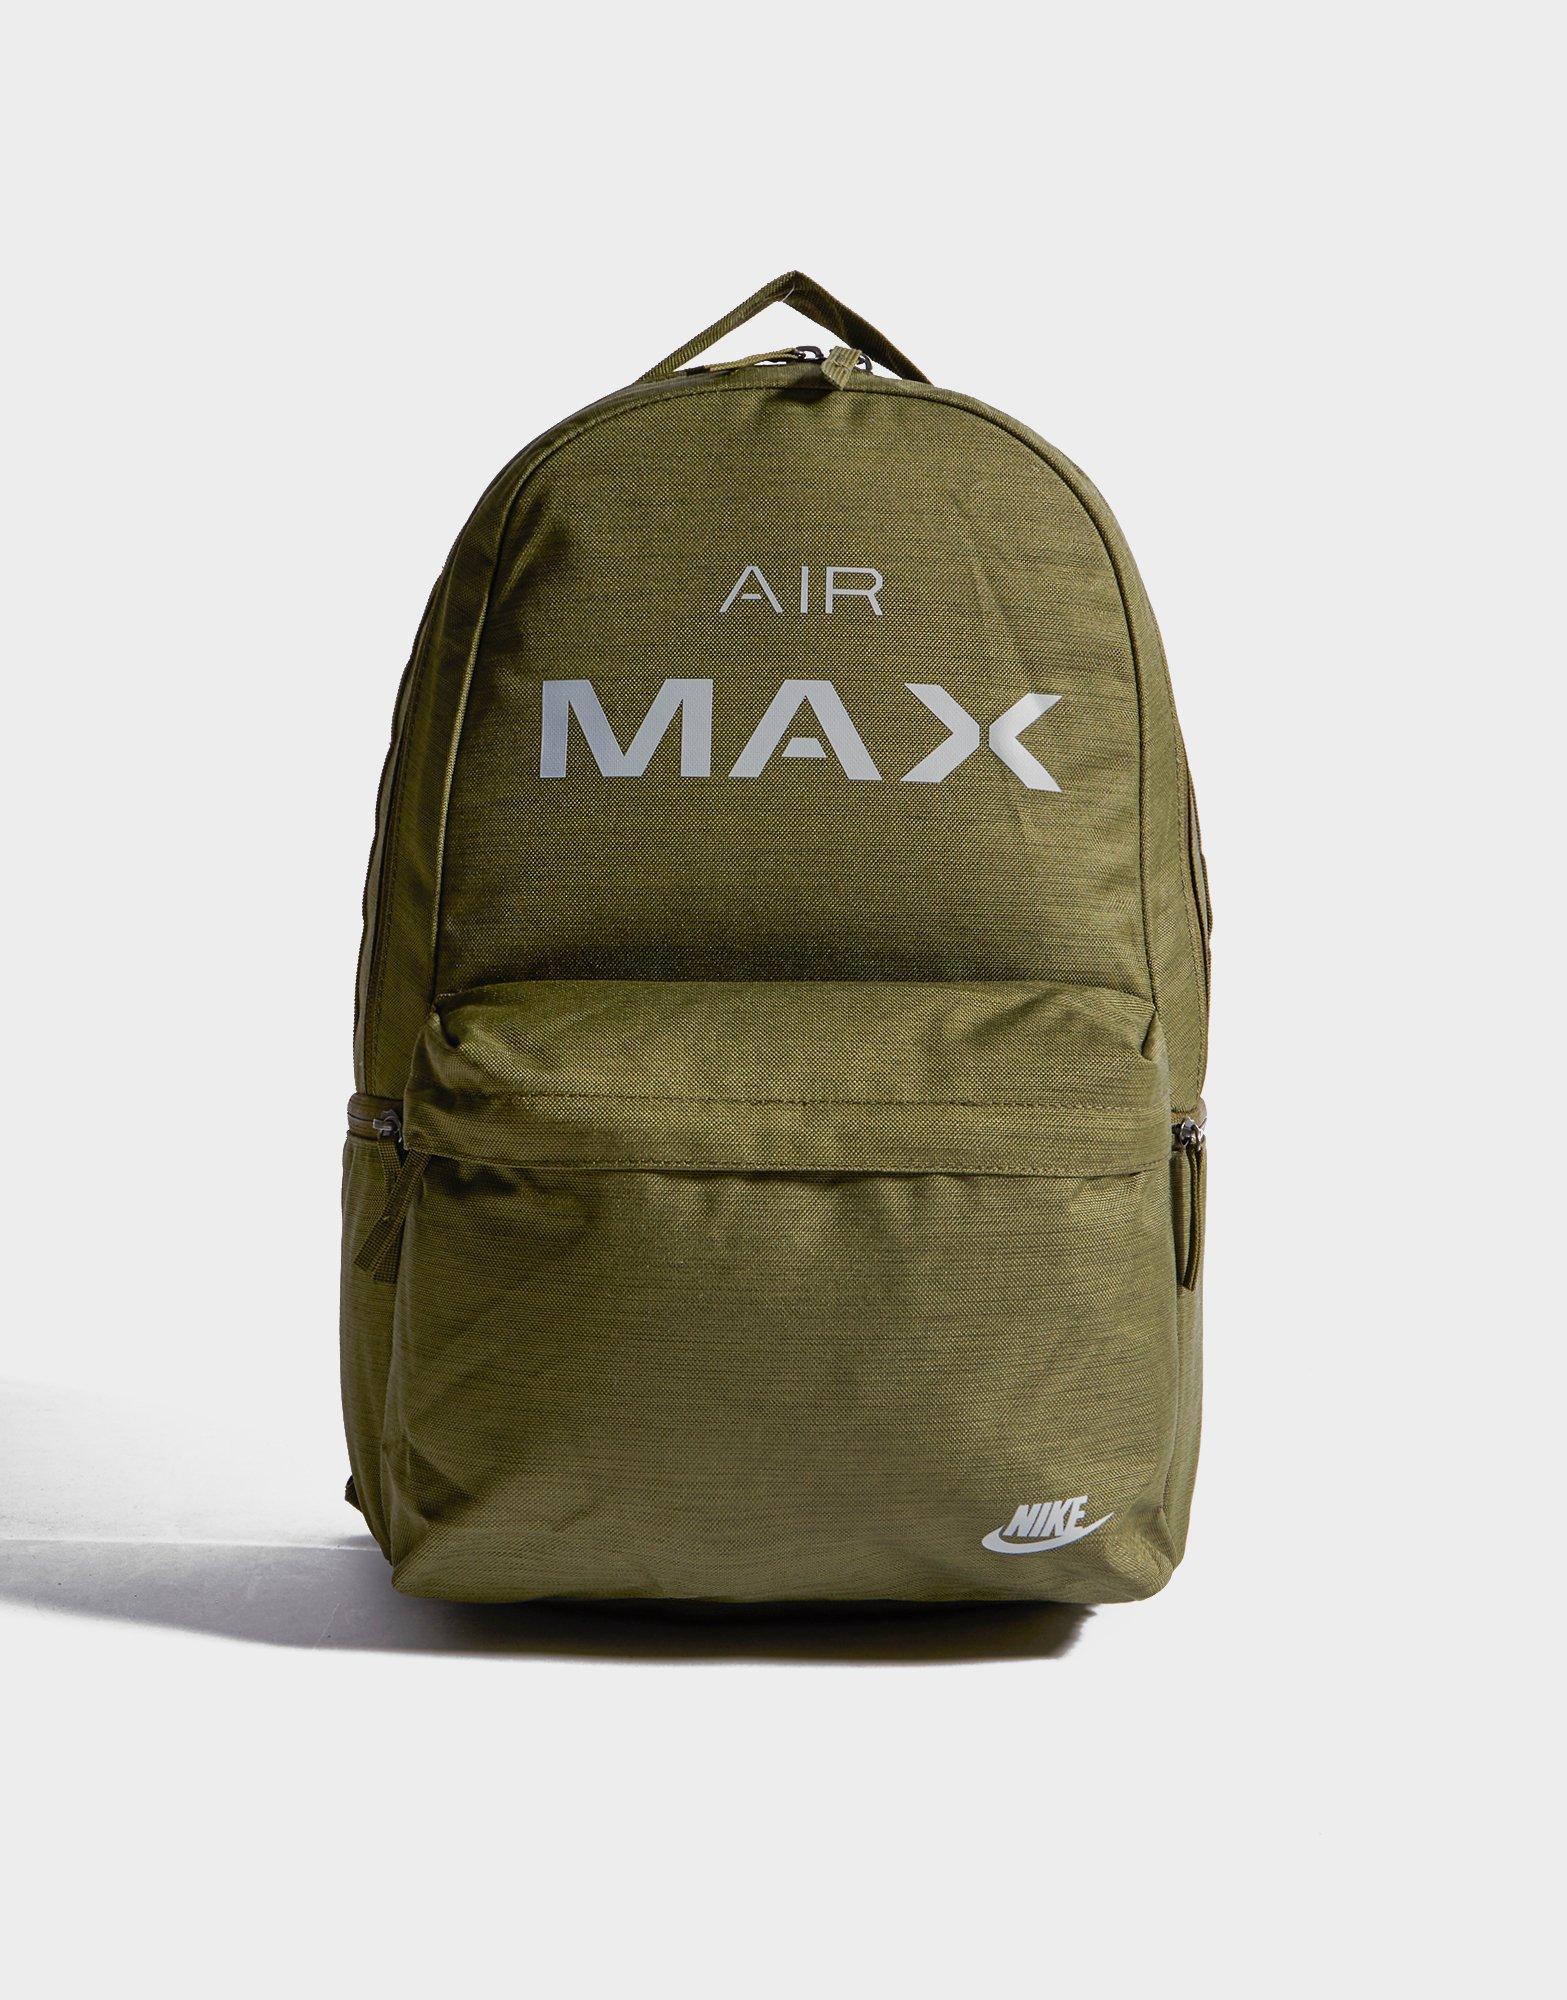 nike air max bag green